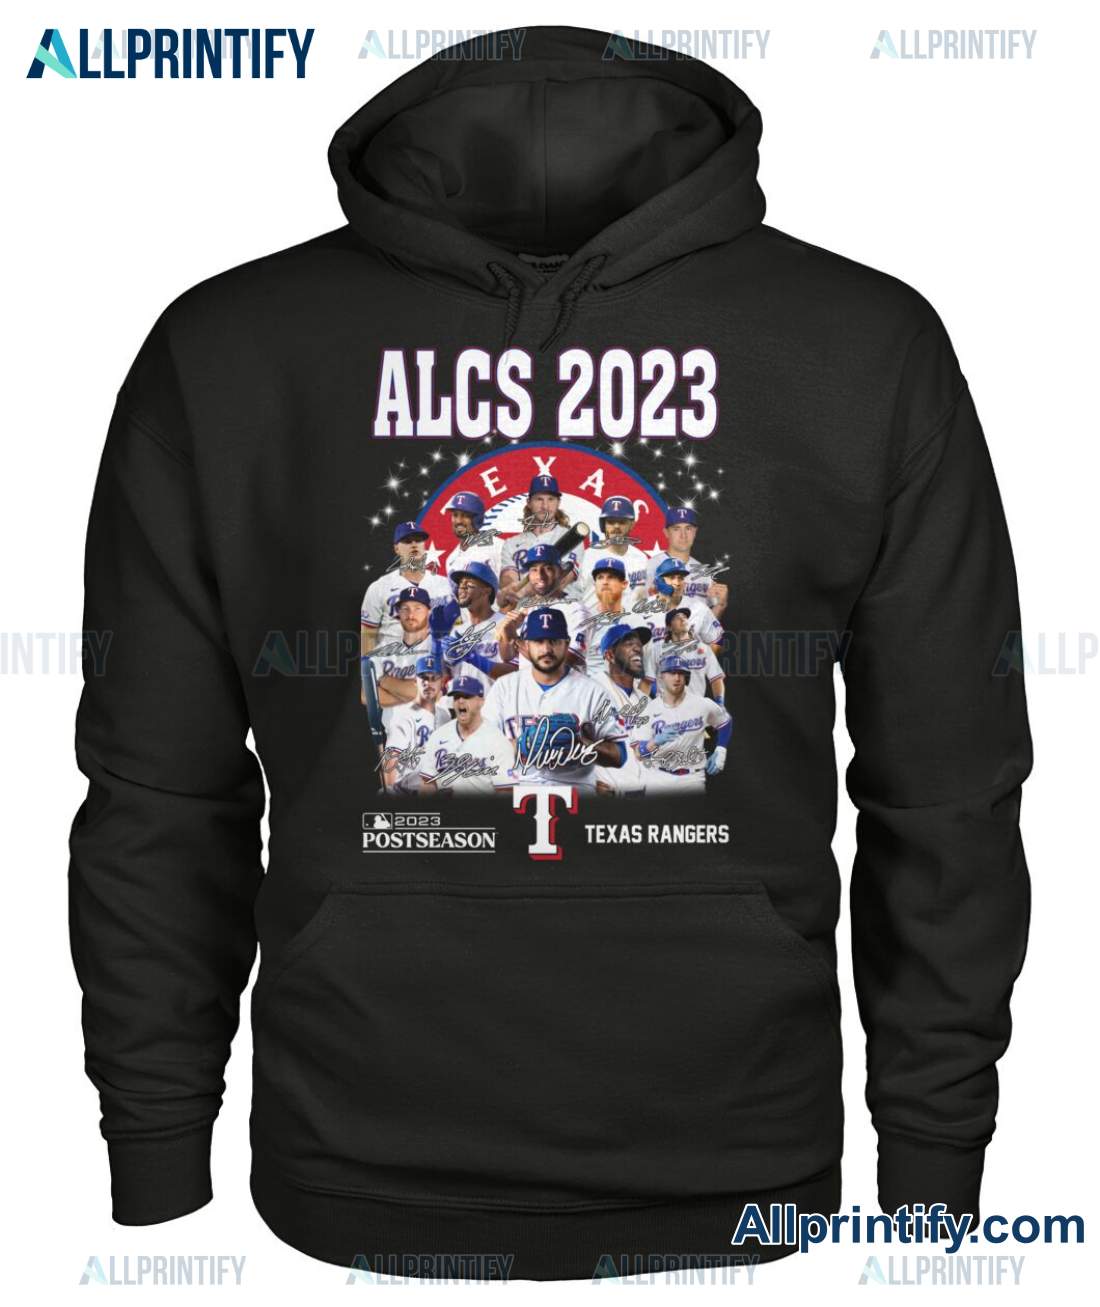 Alcs 2023 Postseason Texas Rangers Signatures Shirt c